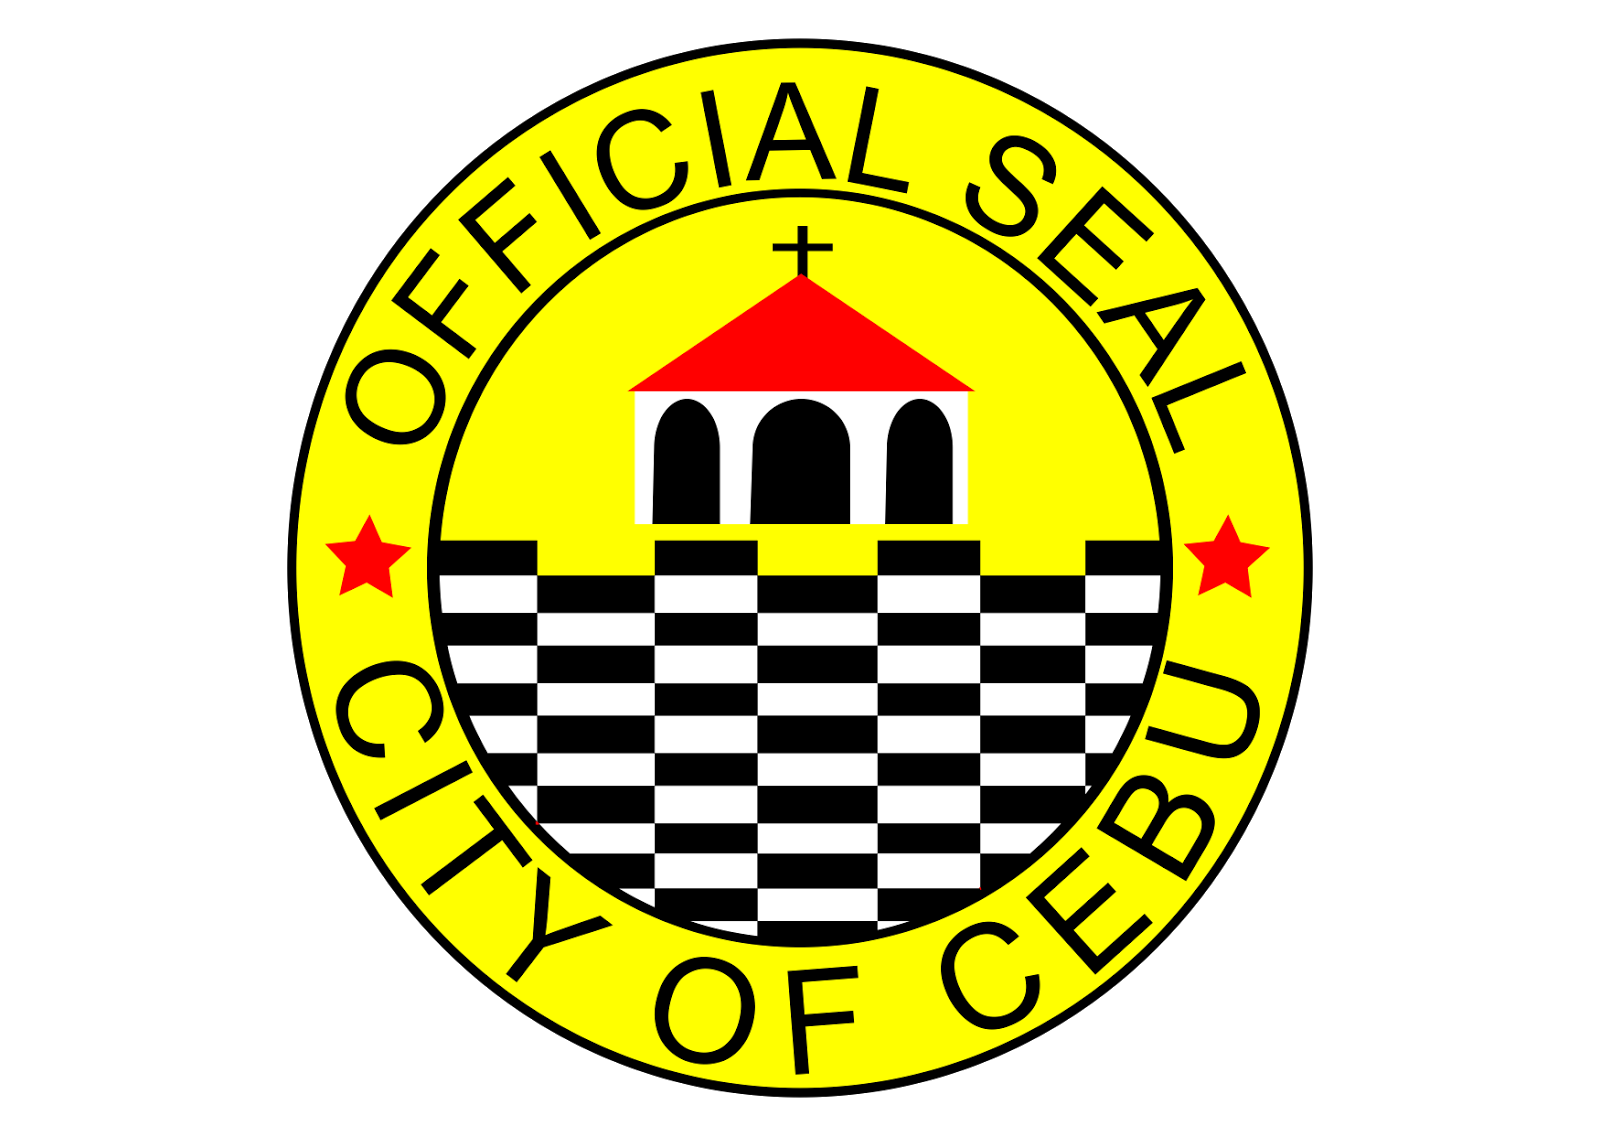 Official Seal of Cebu City